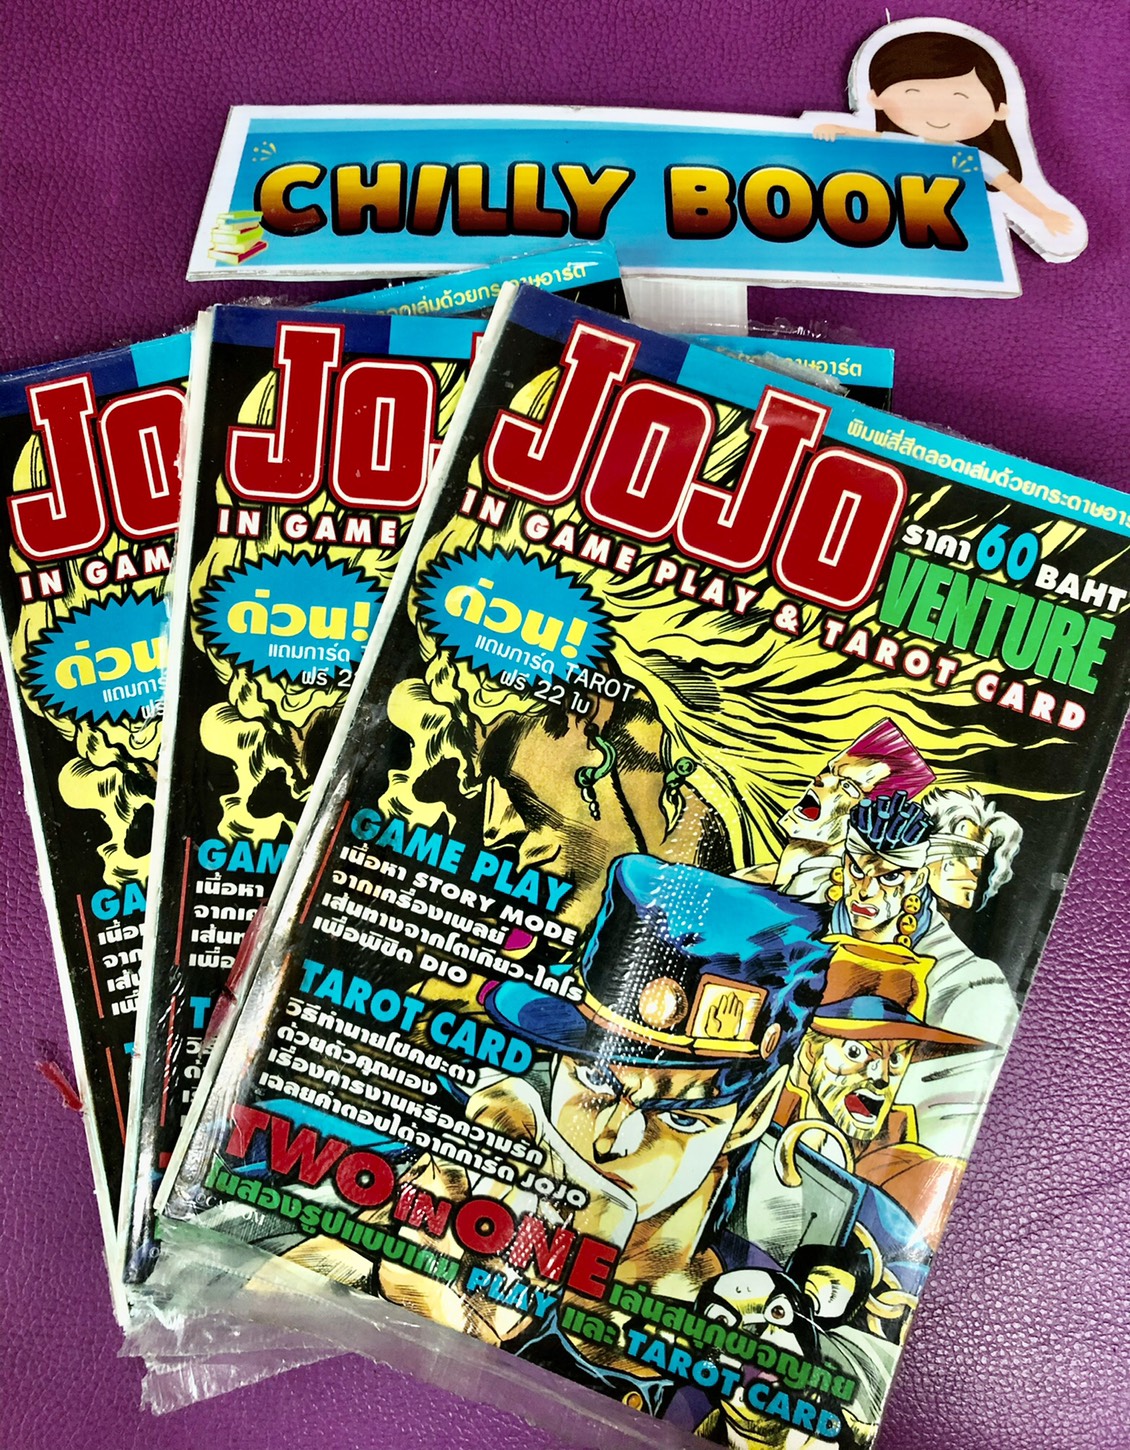 Jojo Venture in Game play & Tarot card นิตยสารเกมส์ by Chilly Book